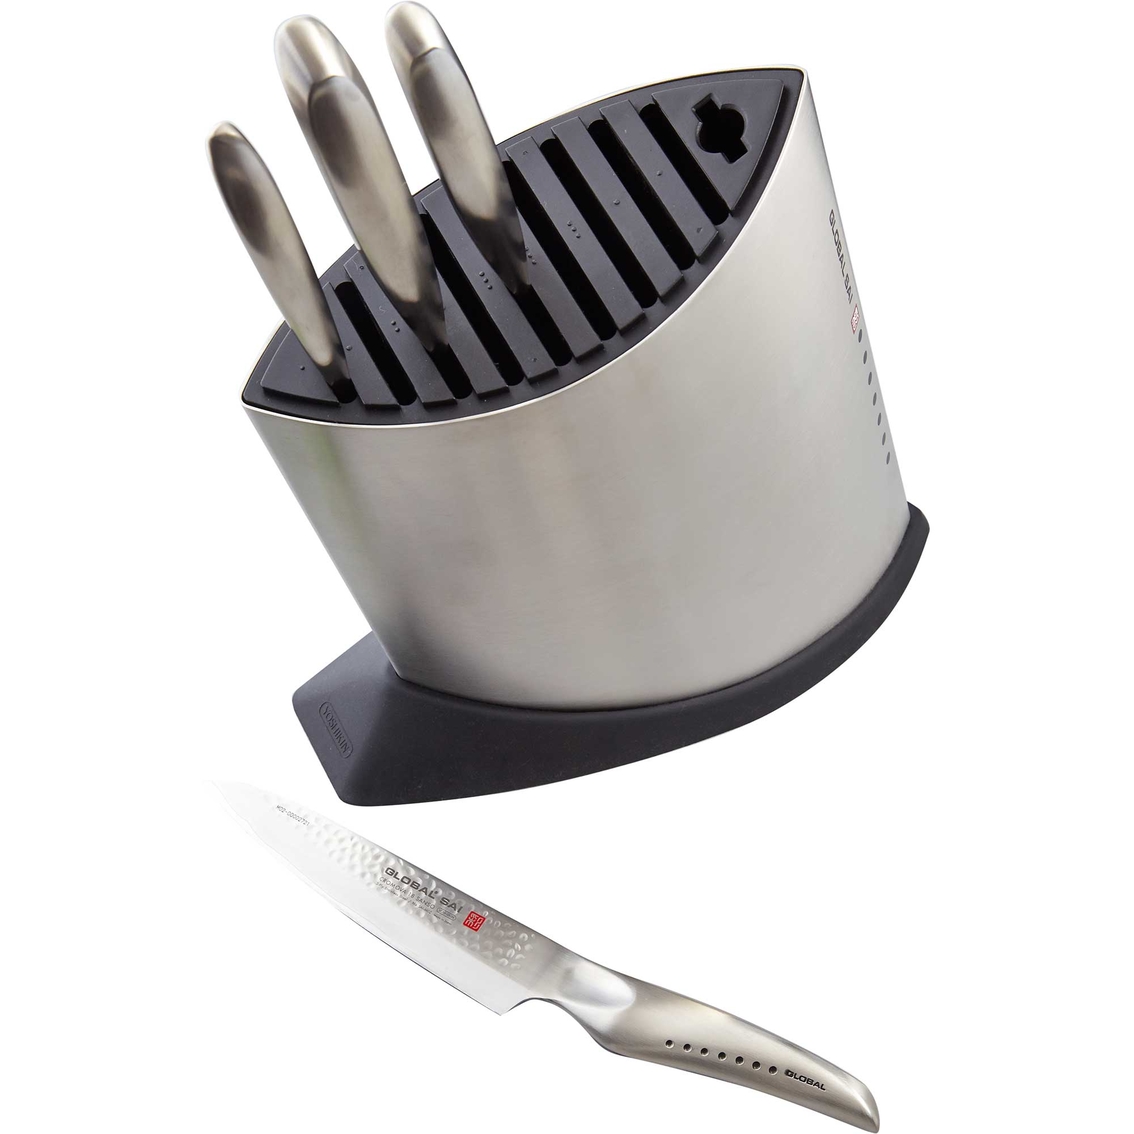 Global Cutlery Sai 5 Pc. Block Set, Cutlery, Household